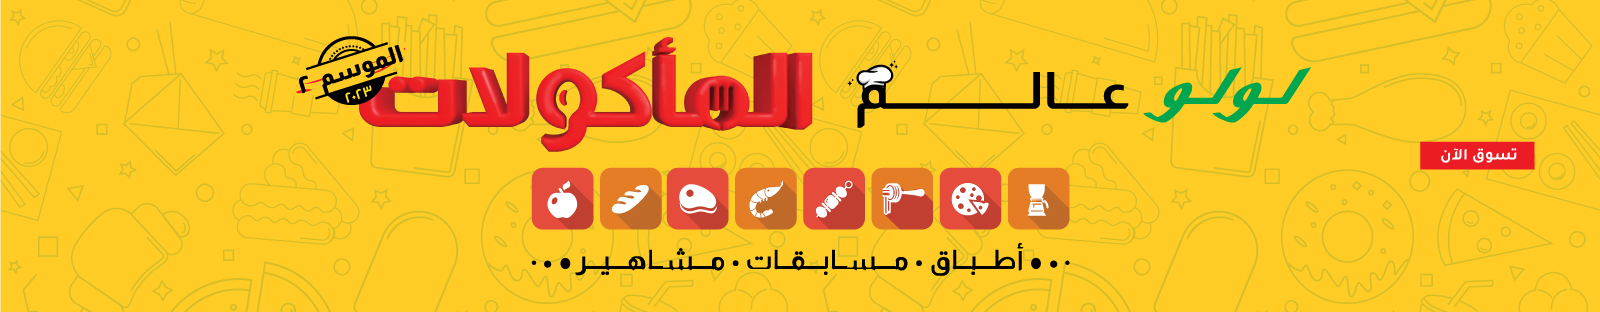 Food-Fest_Web-Banner-Arabic.jpg